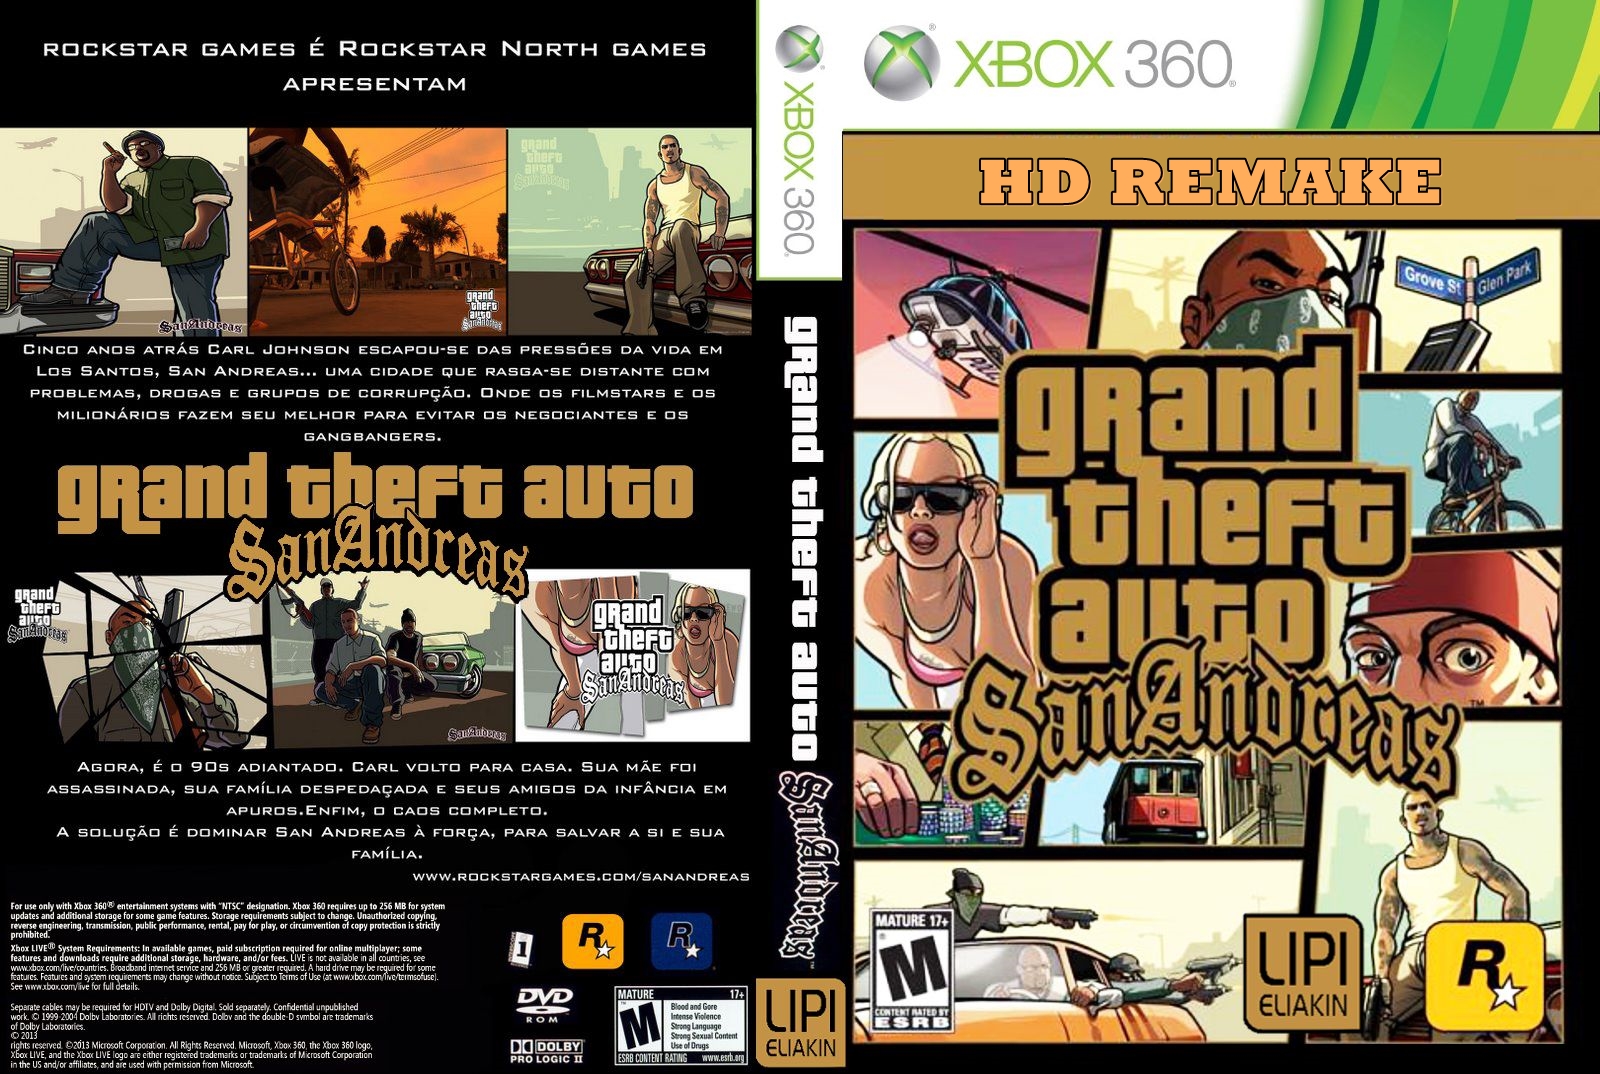 Resultado de imagem para (GTA S.A HD) Grand Theft Auto: San Andreas HD Remake xbox 360 covers